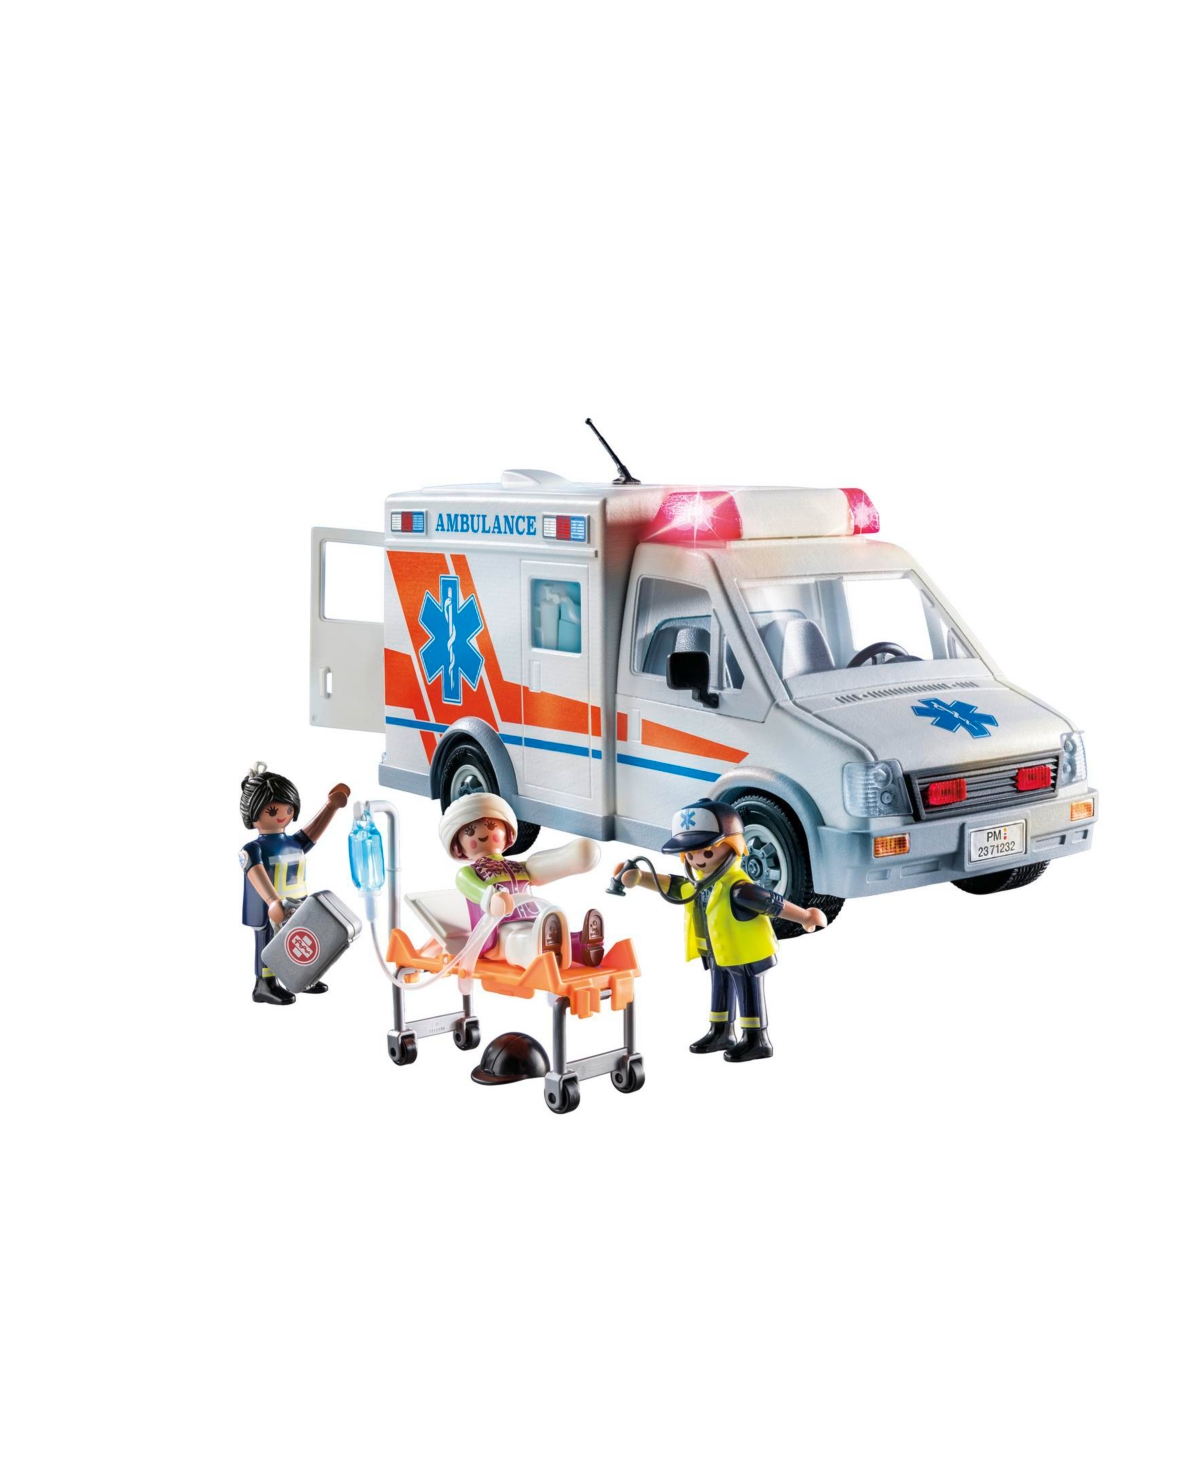 Playmobil Kids' Ambulance In Multi